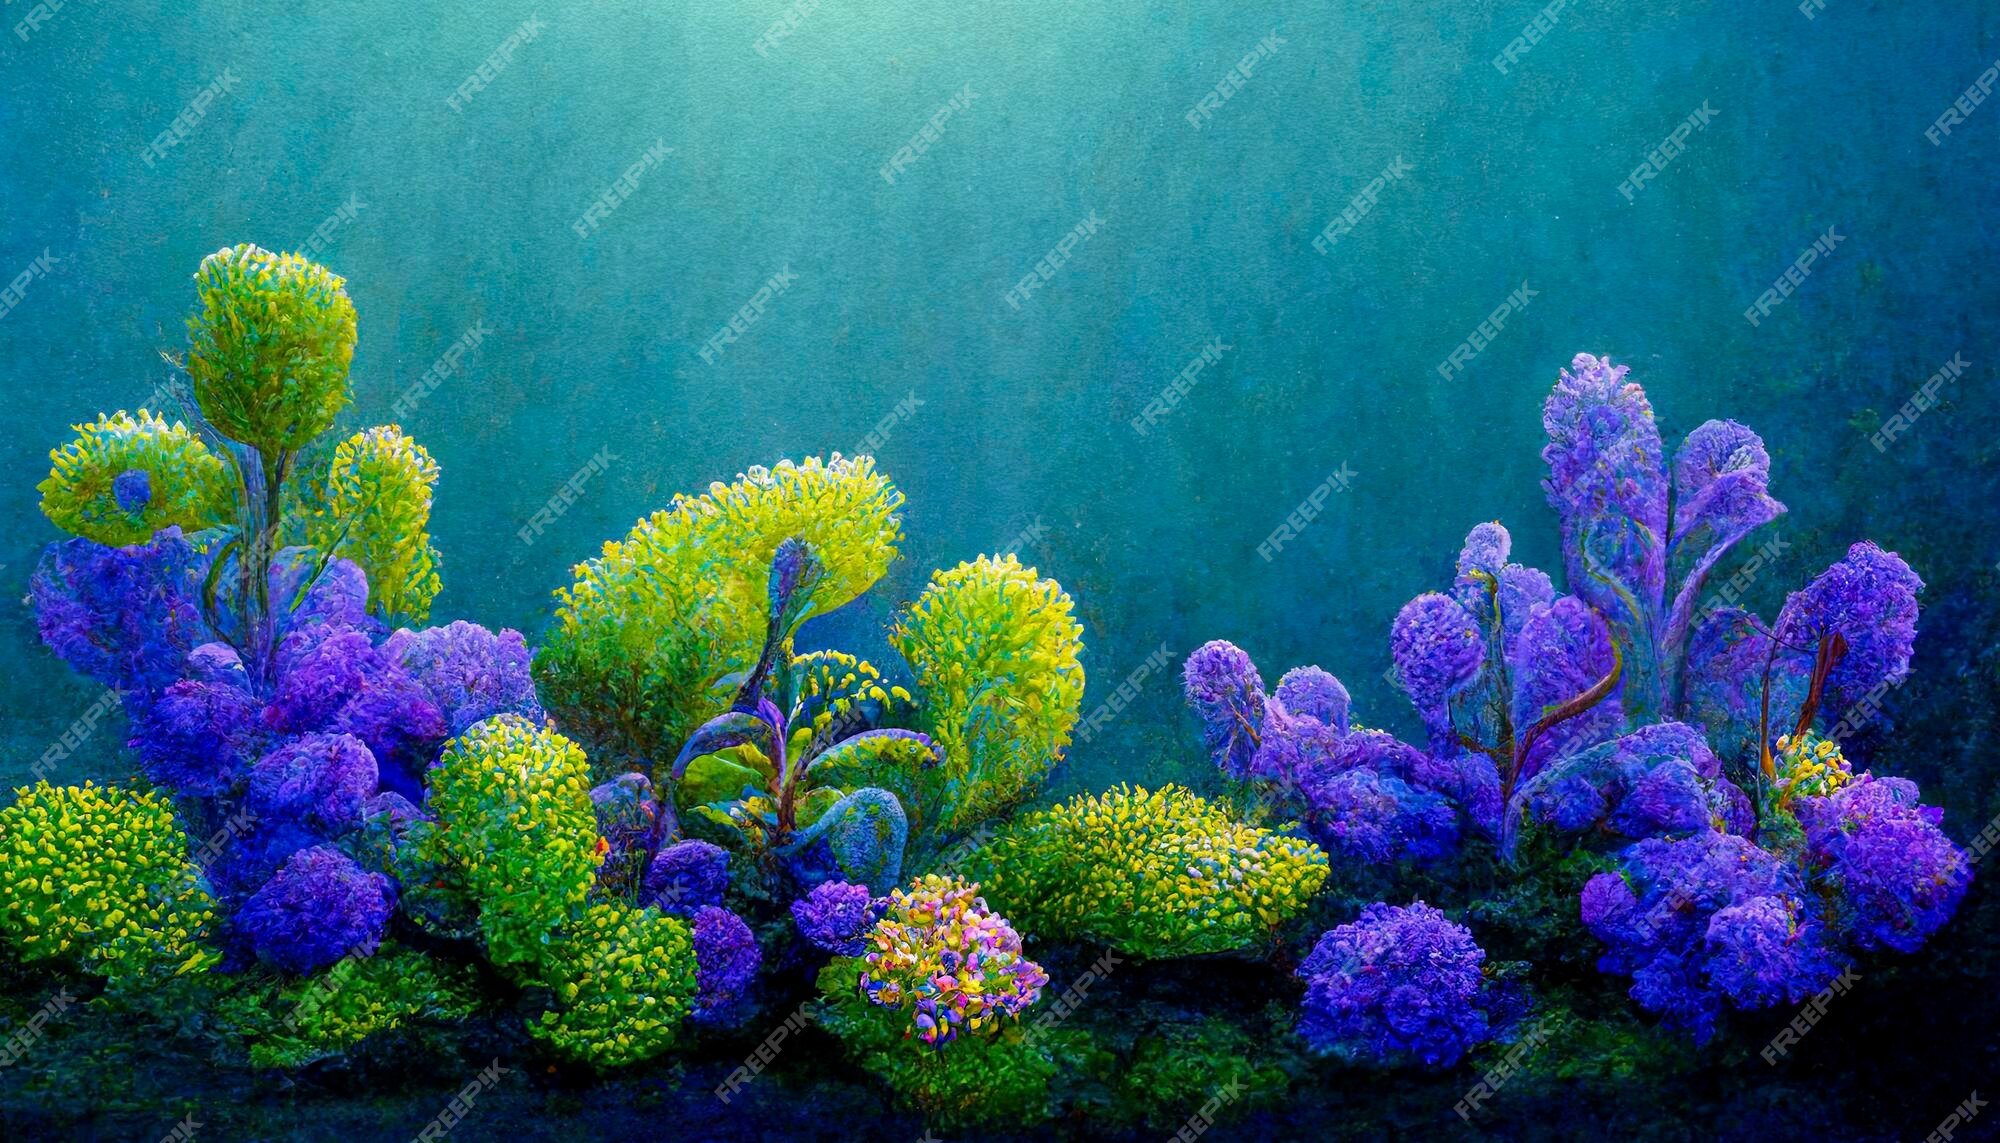 watercolor-illustration-mysterious-fantasy-undersea-aquatic-plants-fairy-tale-background_612853-98.jpg